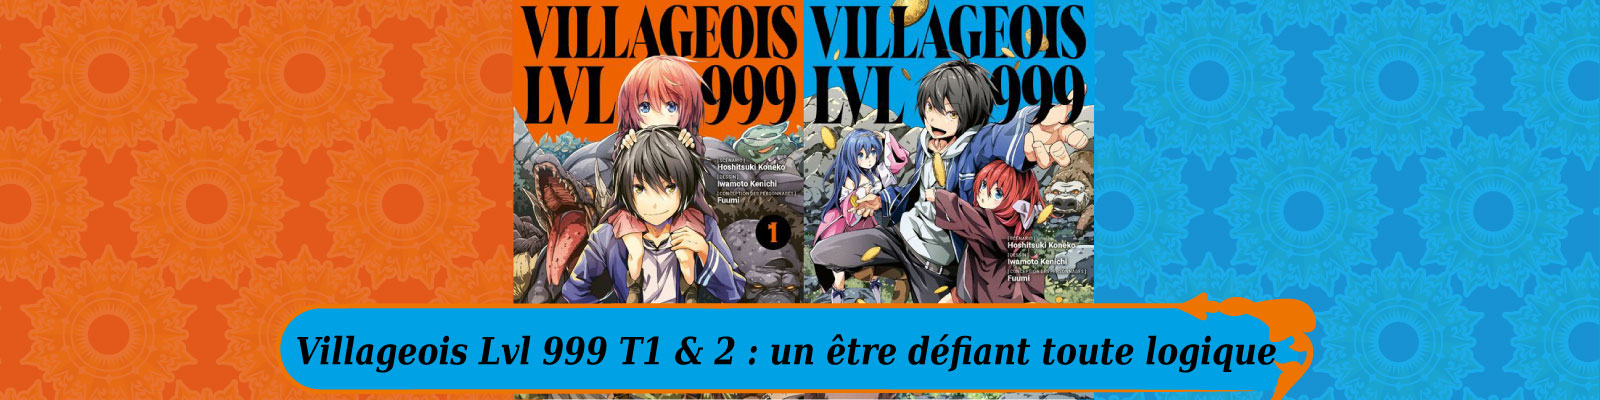 Villageois LVL 999-Vol.2-2